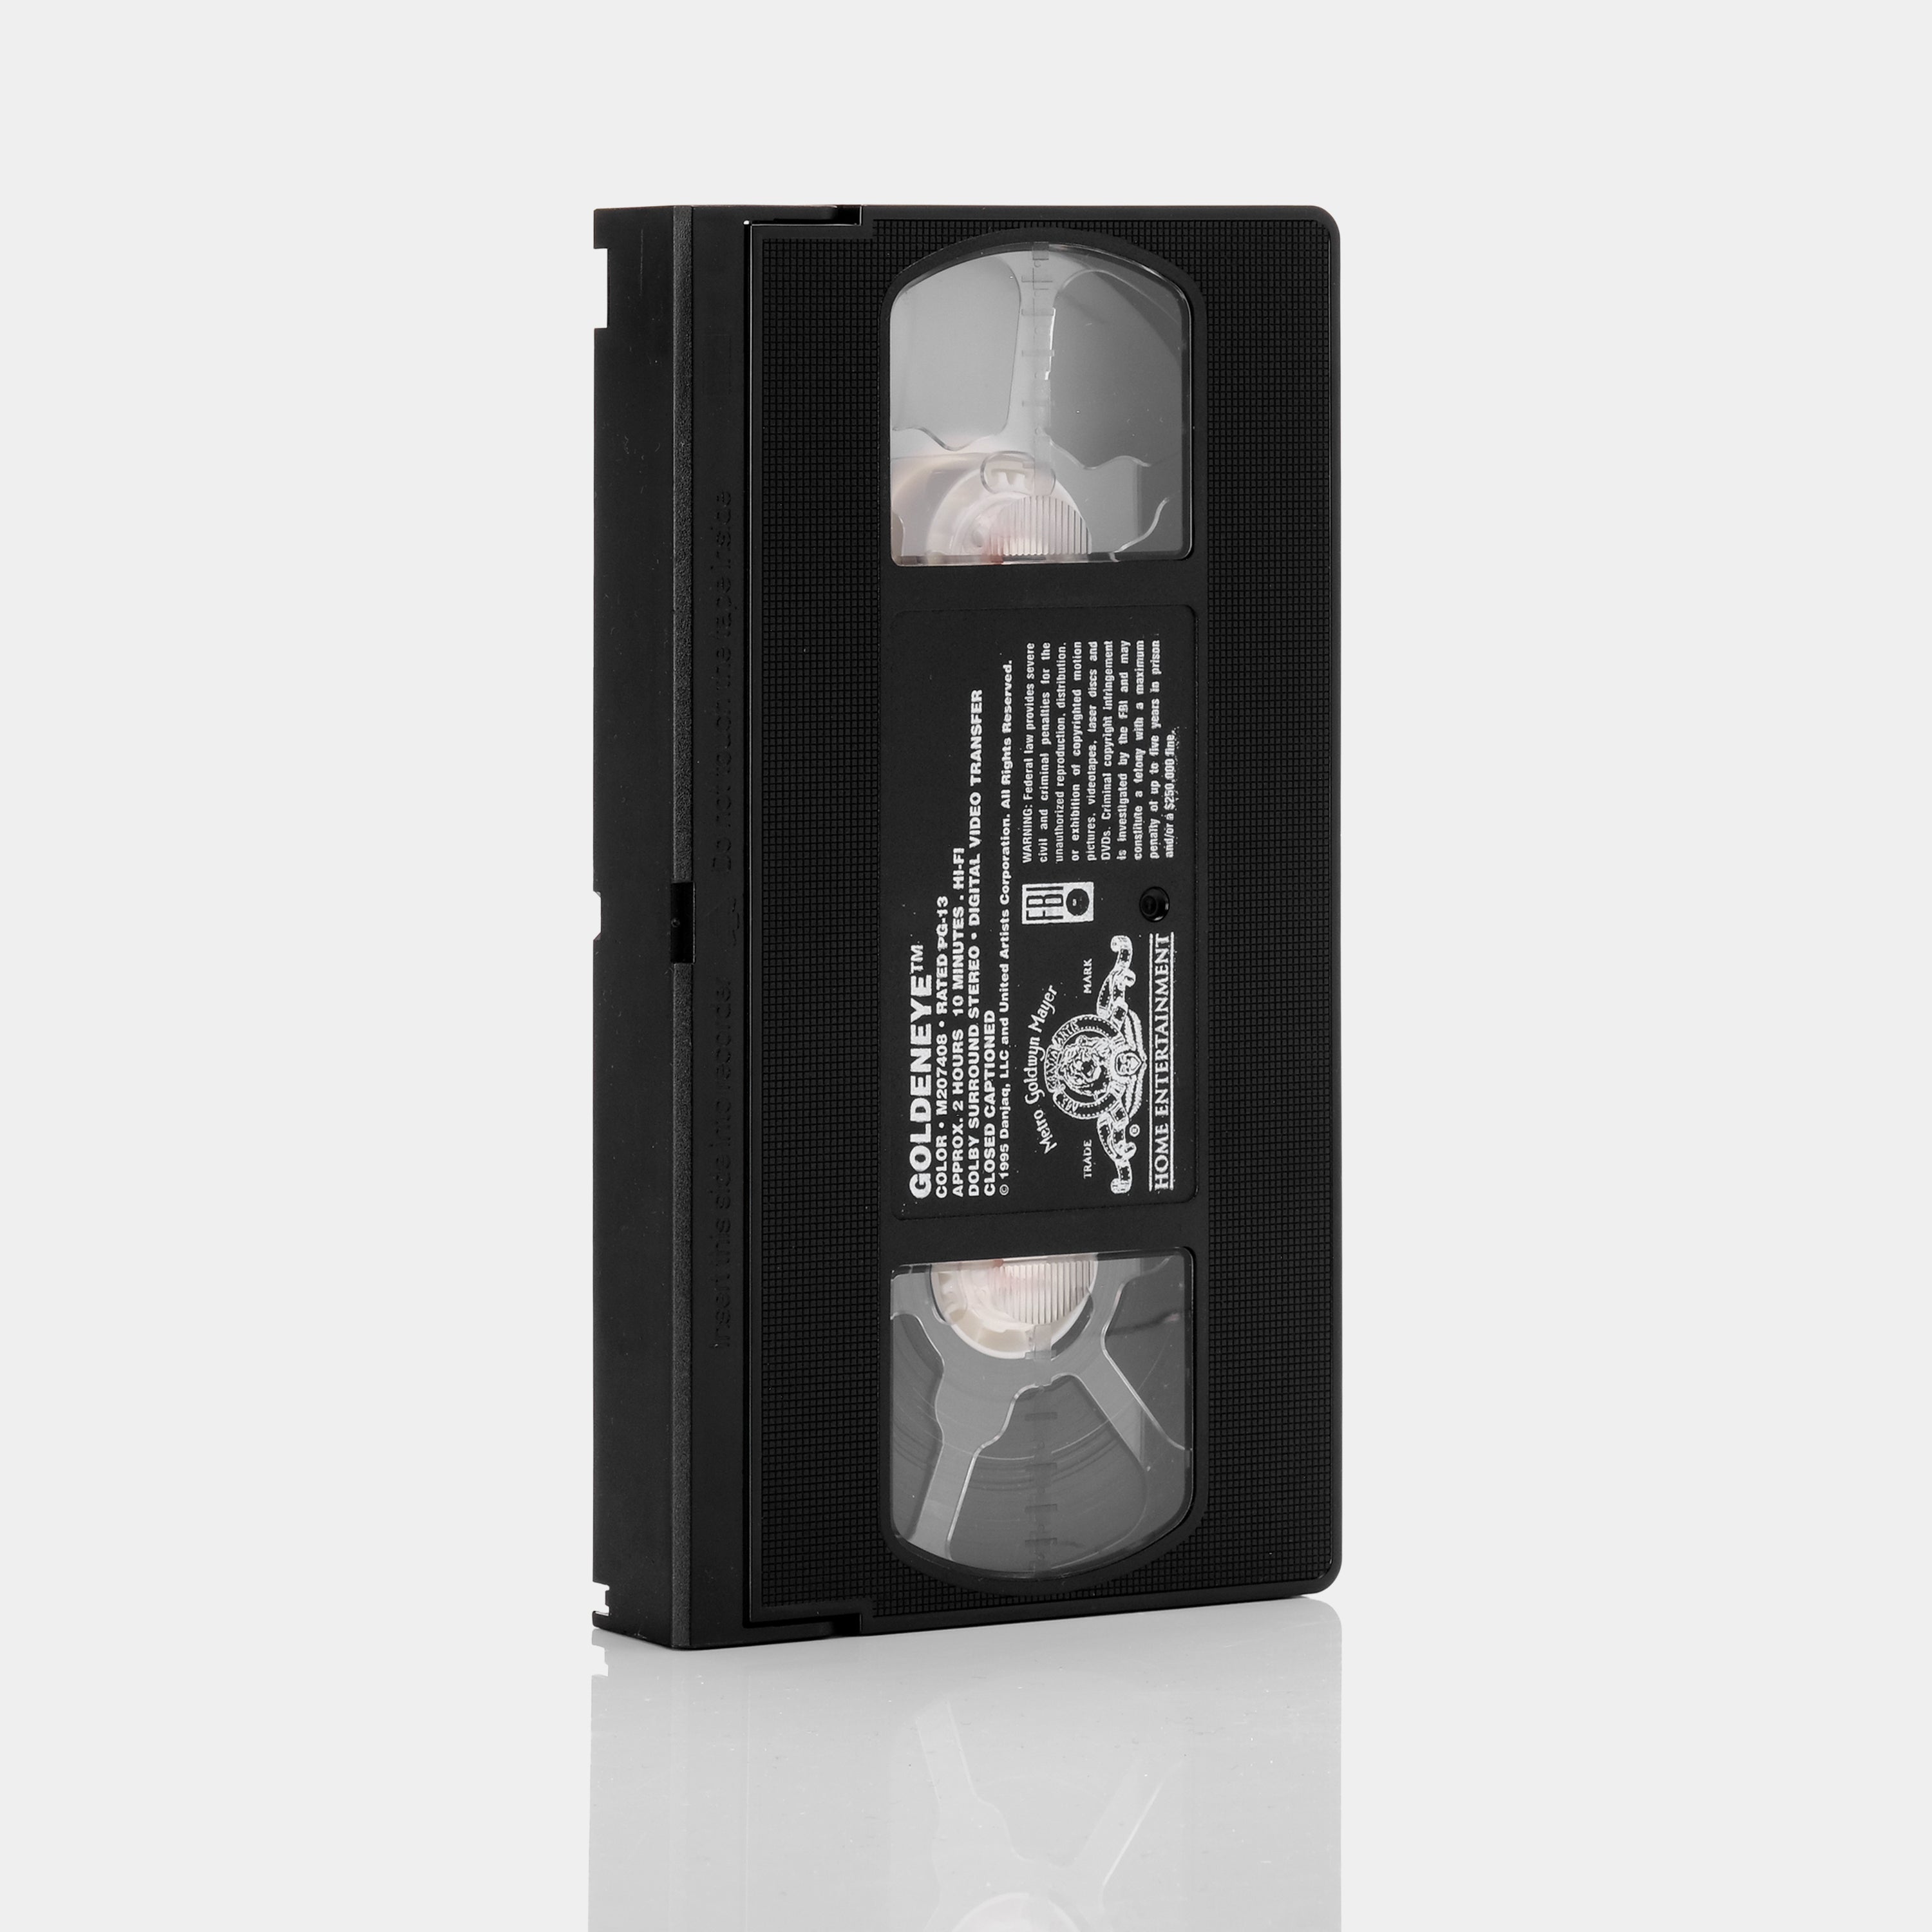 GoldenEye VHS Tape